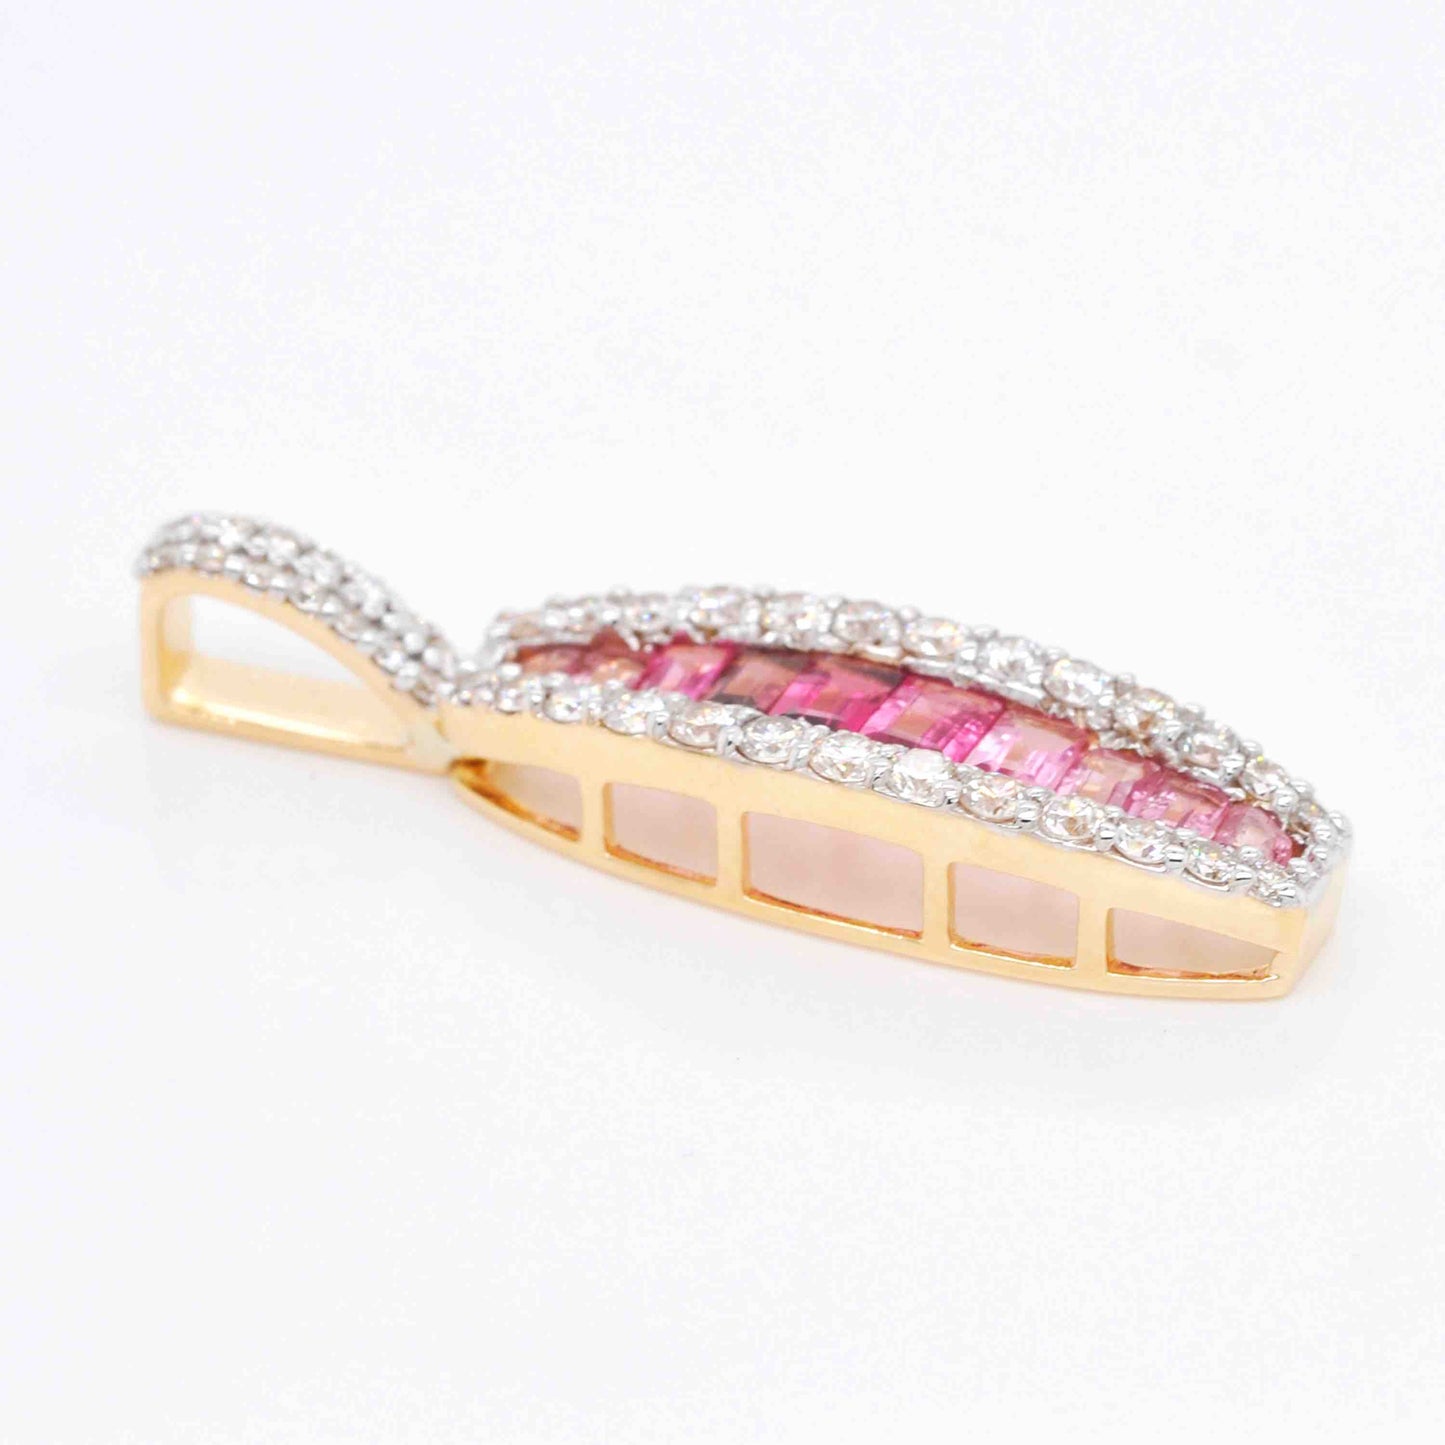 Chic pink gemstone pendant